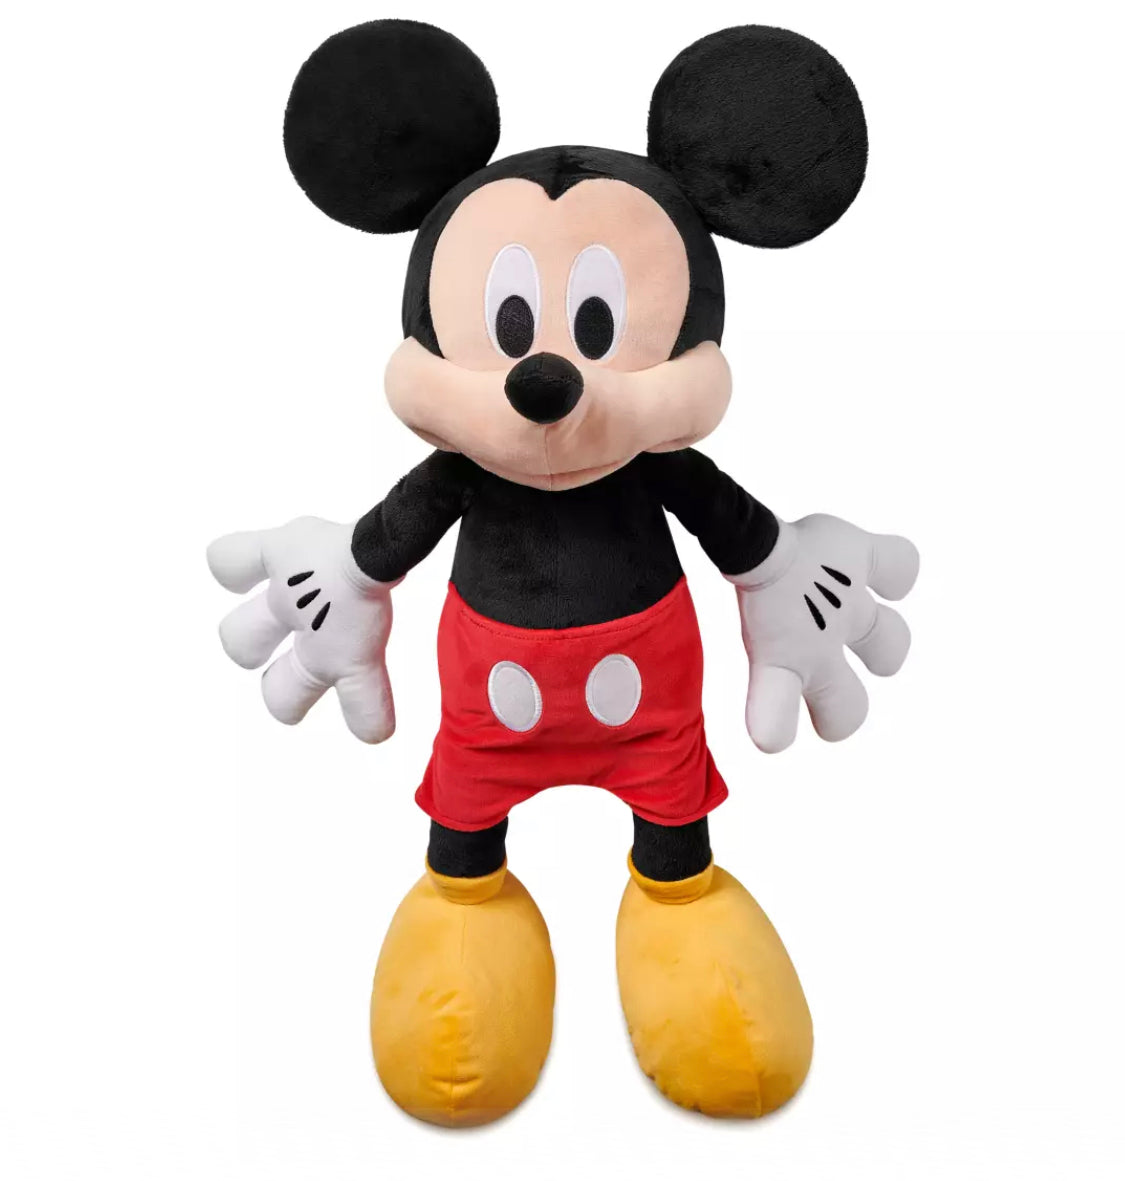 Disney Mickey Mouse Plush Toy - Large